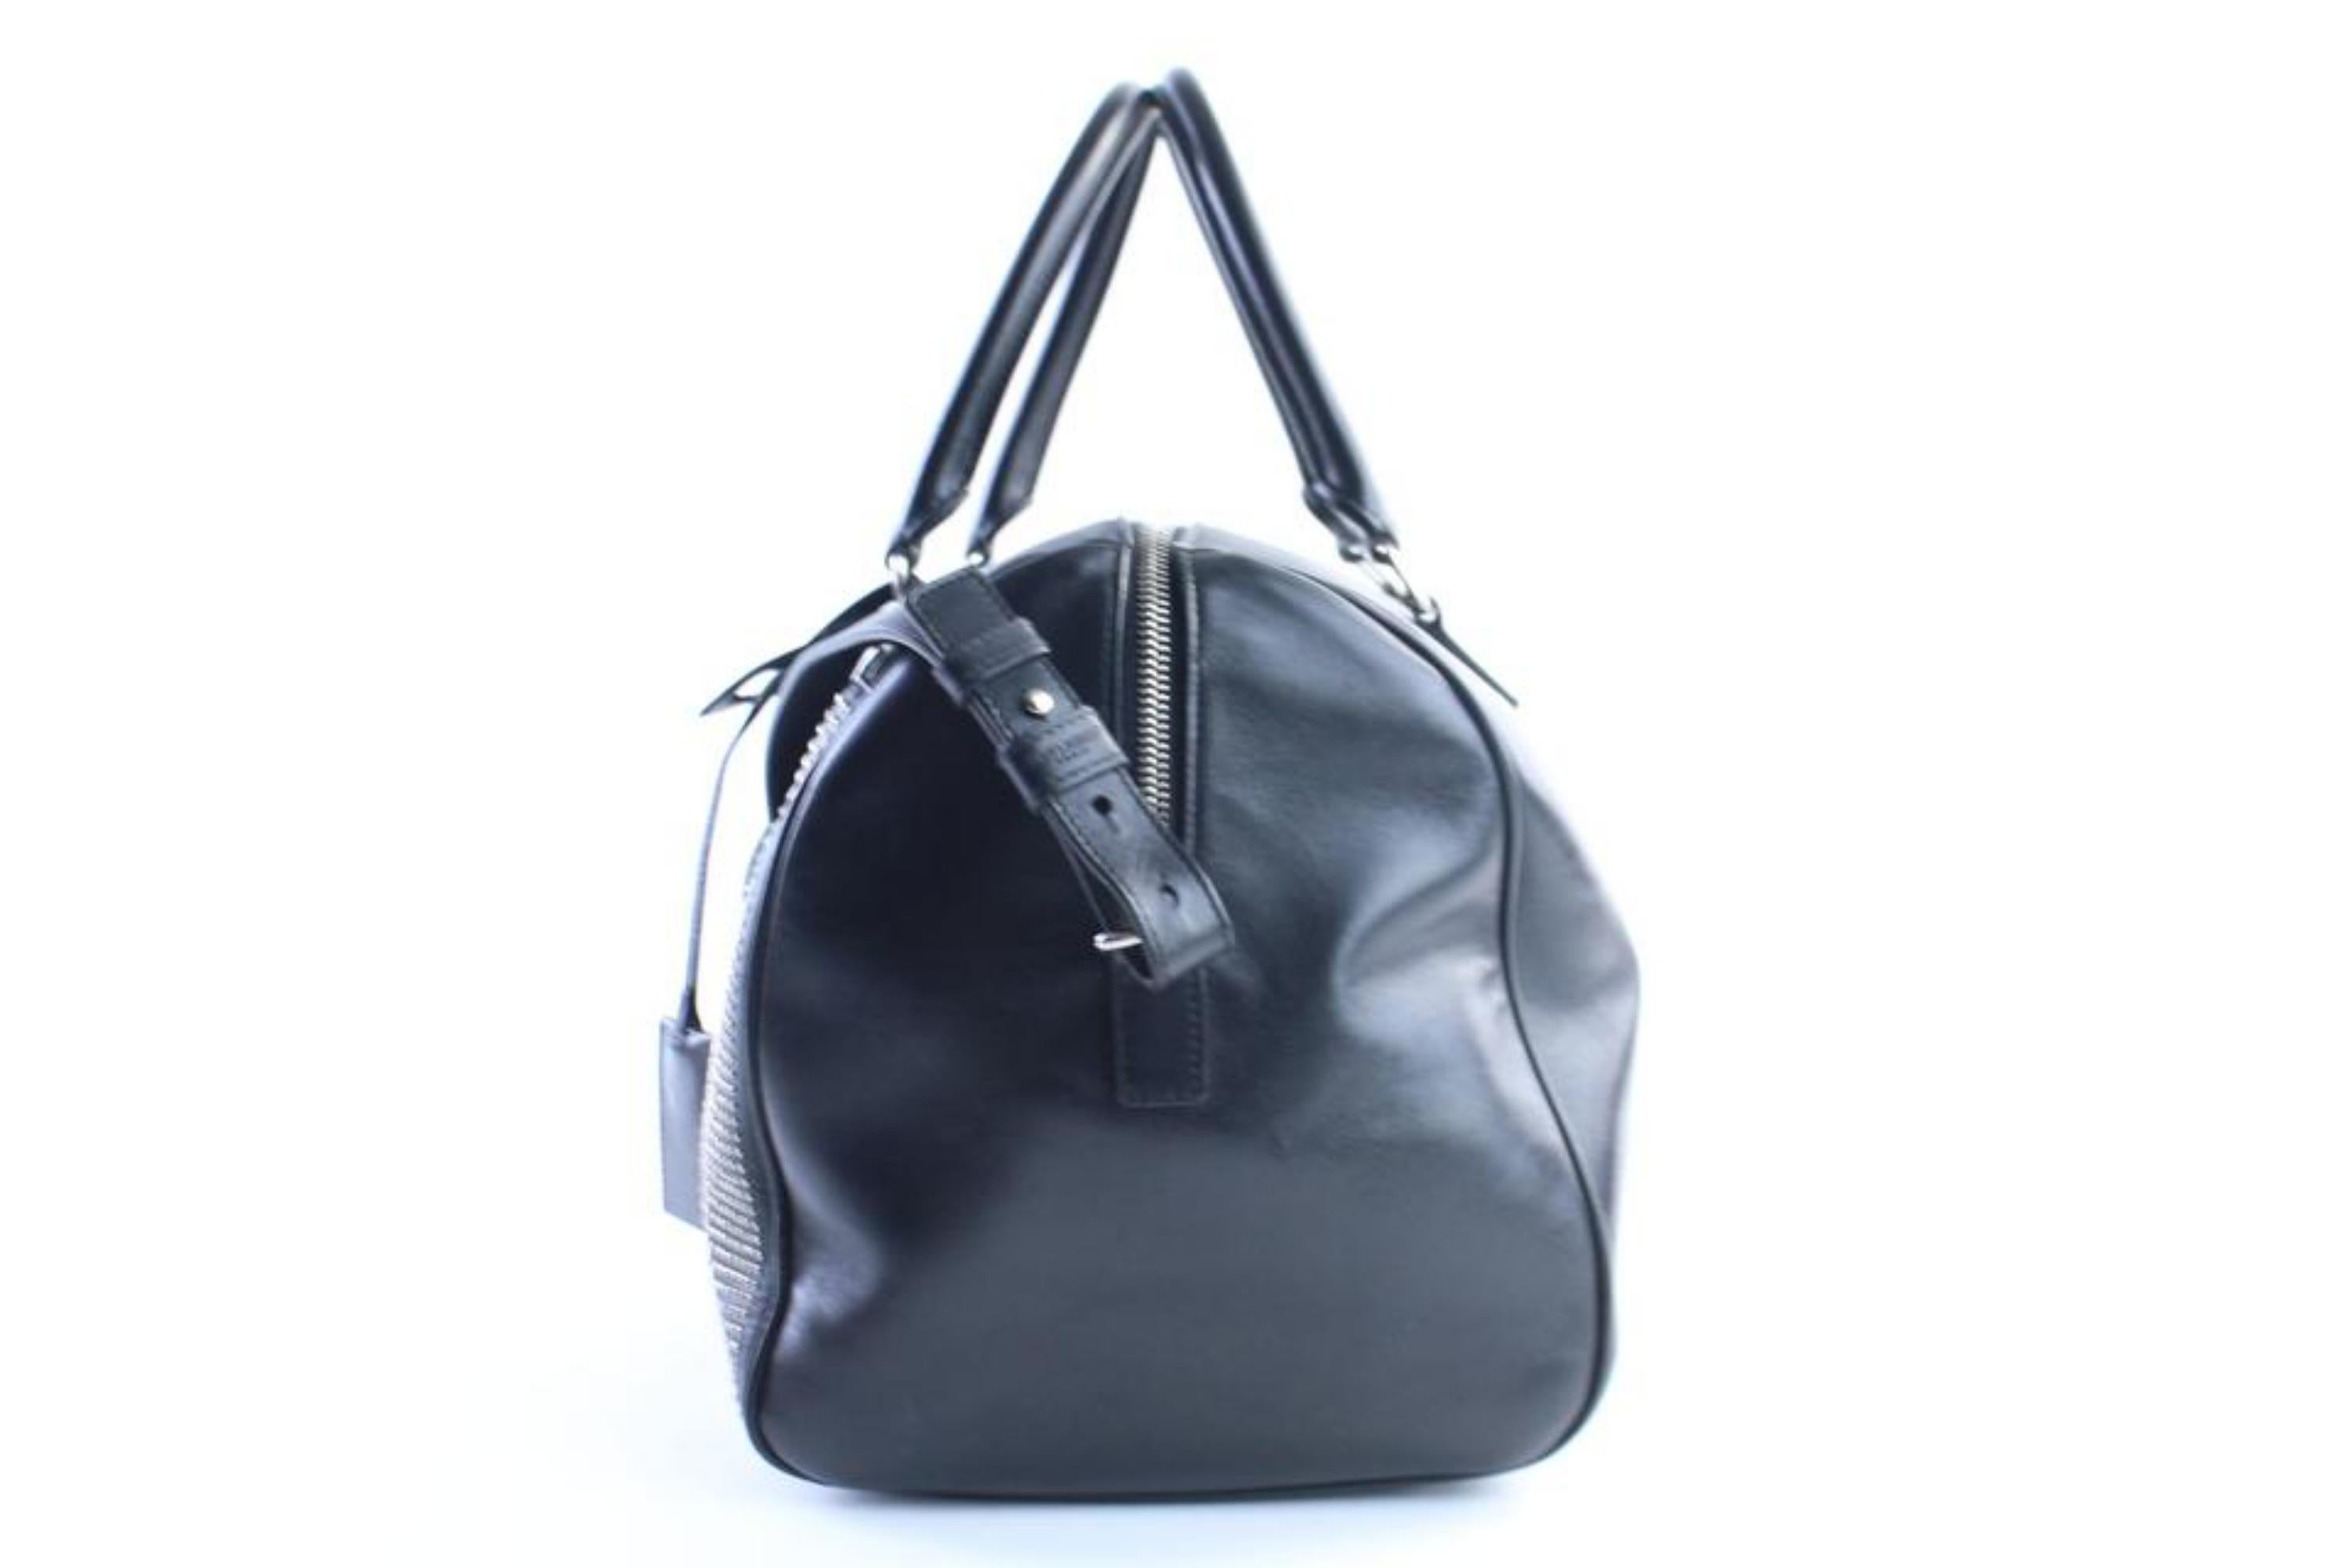 Saint Laurent Duffle Studded 6 Hour 10mr0503 Black Leather Weekend/Travel Bag For Sale 7